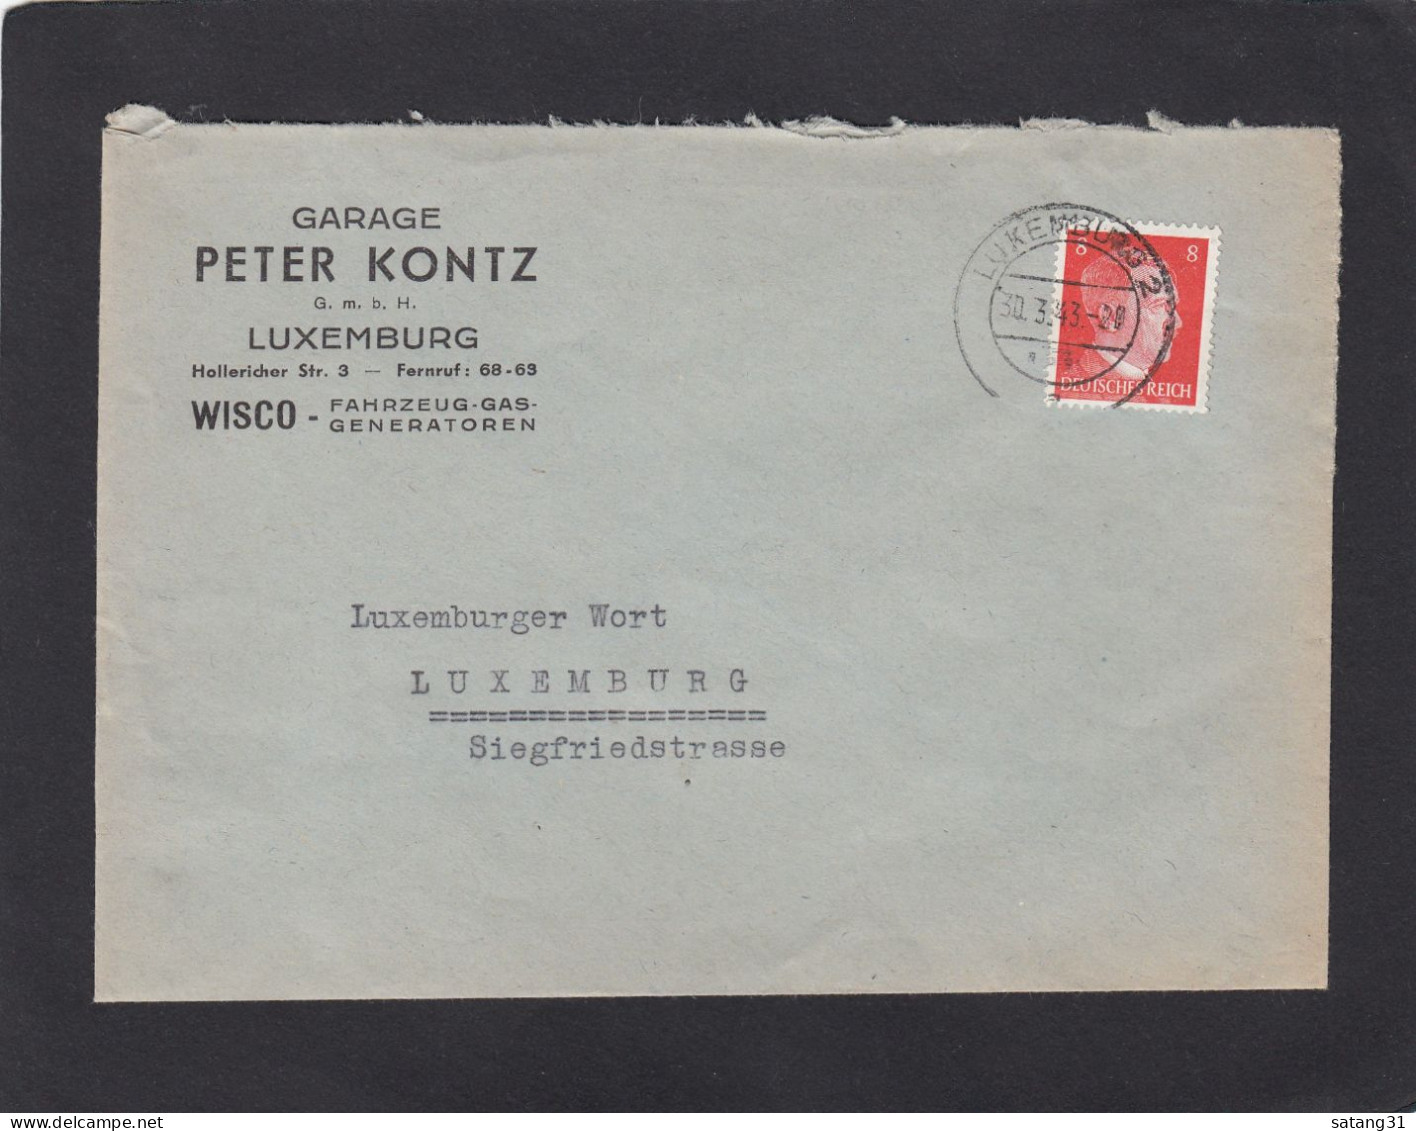 GARAGE PETER KONTZ G.M.B.H., LUXEMBURG. WISCO - FAHRZEUG-GAS-GENERATOREN. - 1940-1944 Ocupación Alemana